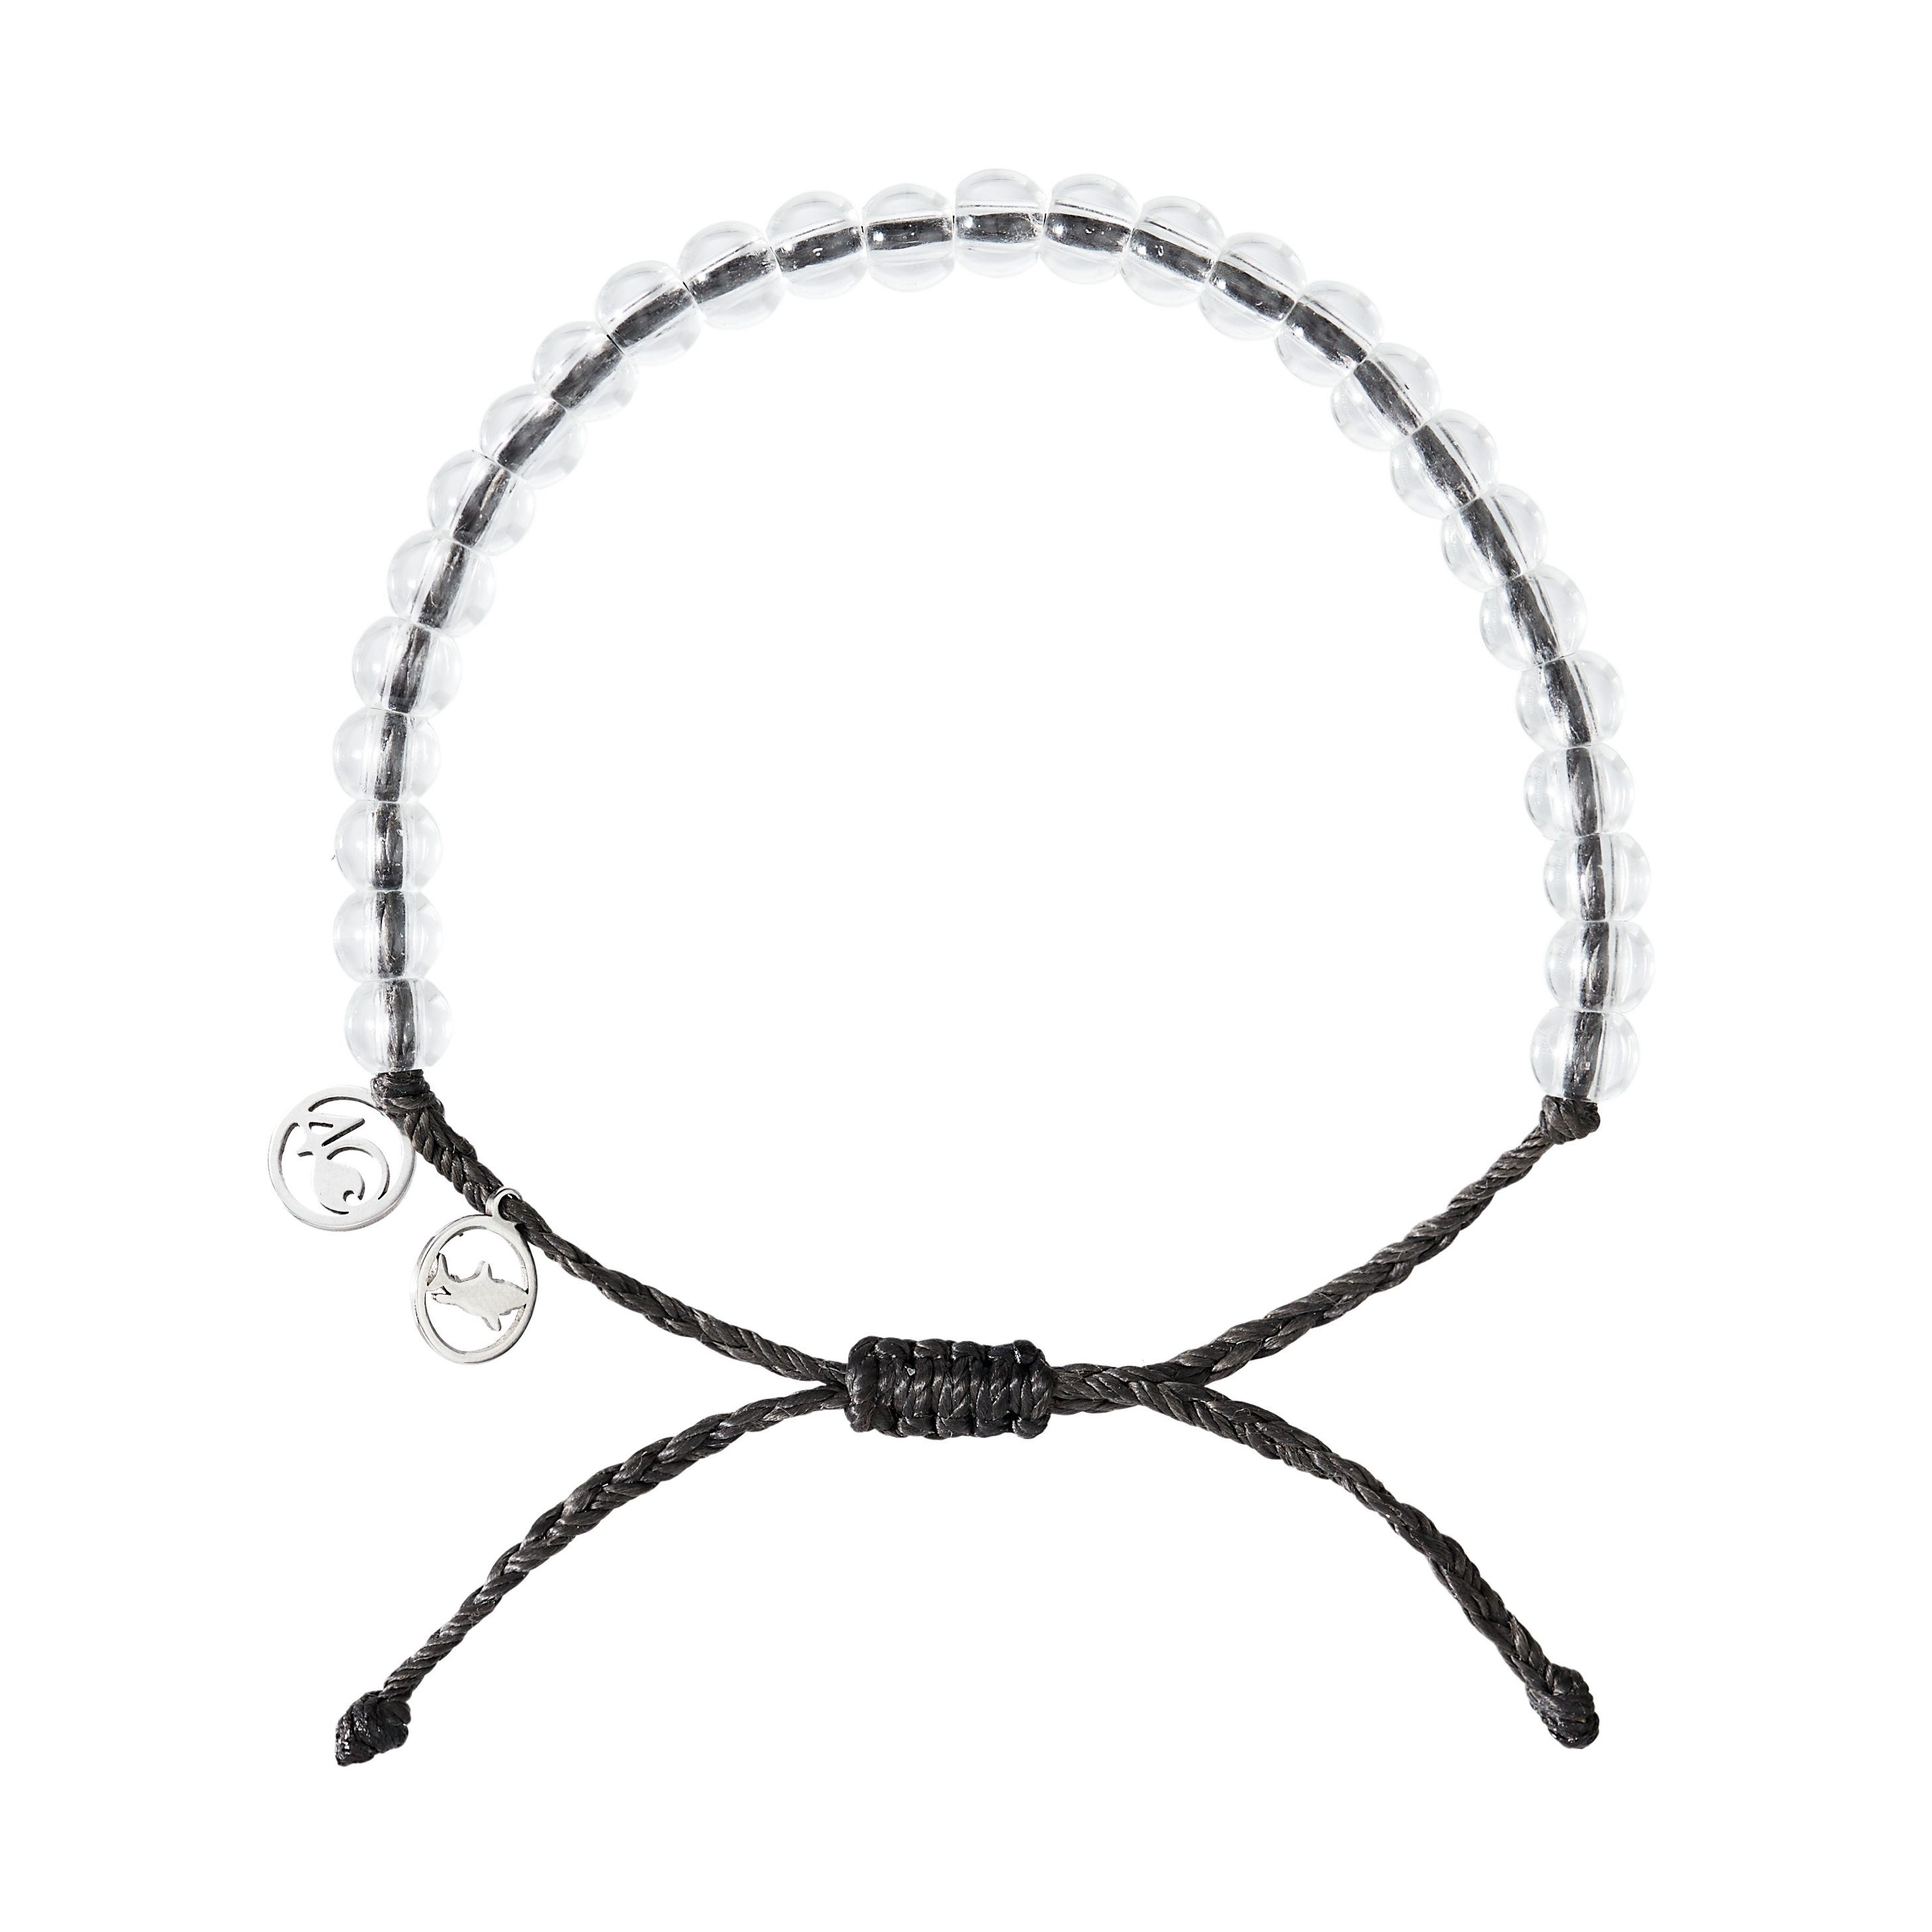 Buy Stainless Steel Mens Bracelet, Waterproof Bracelet, Linked Chain  Bracelet, Gift for Him, Hypoallergenic Bracelet Online in India - Etsy